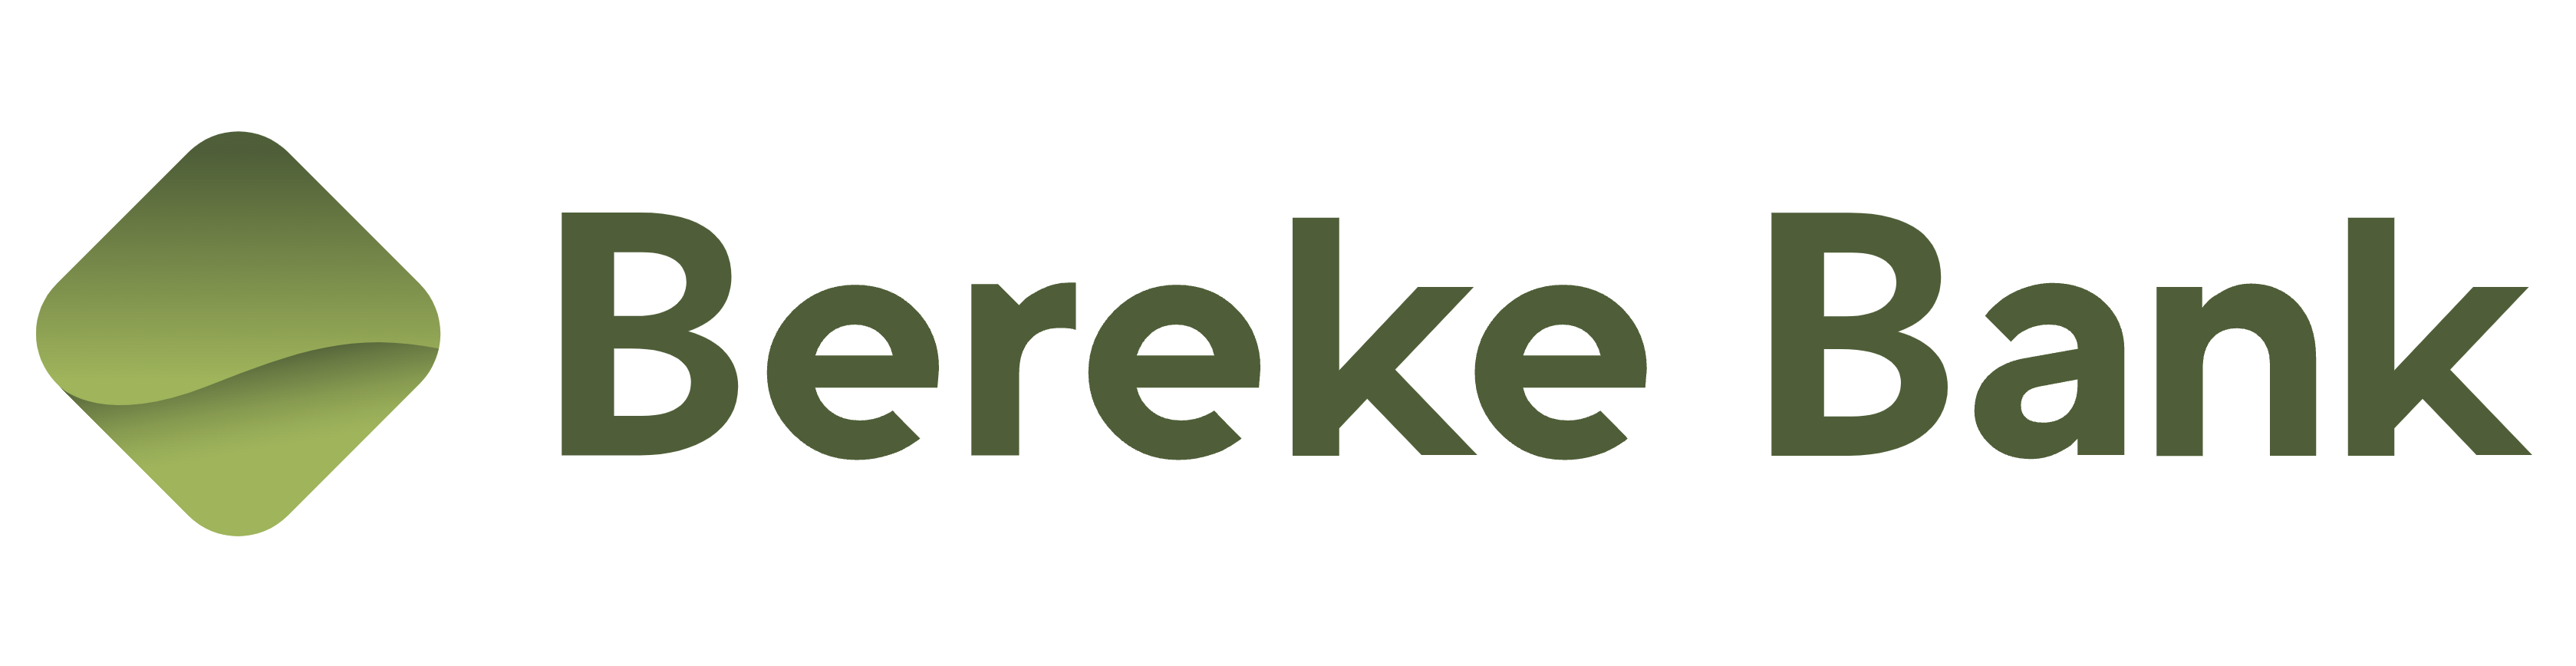 Bereke bank Кредитование под залог депозита